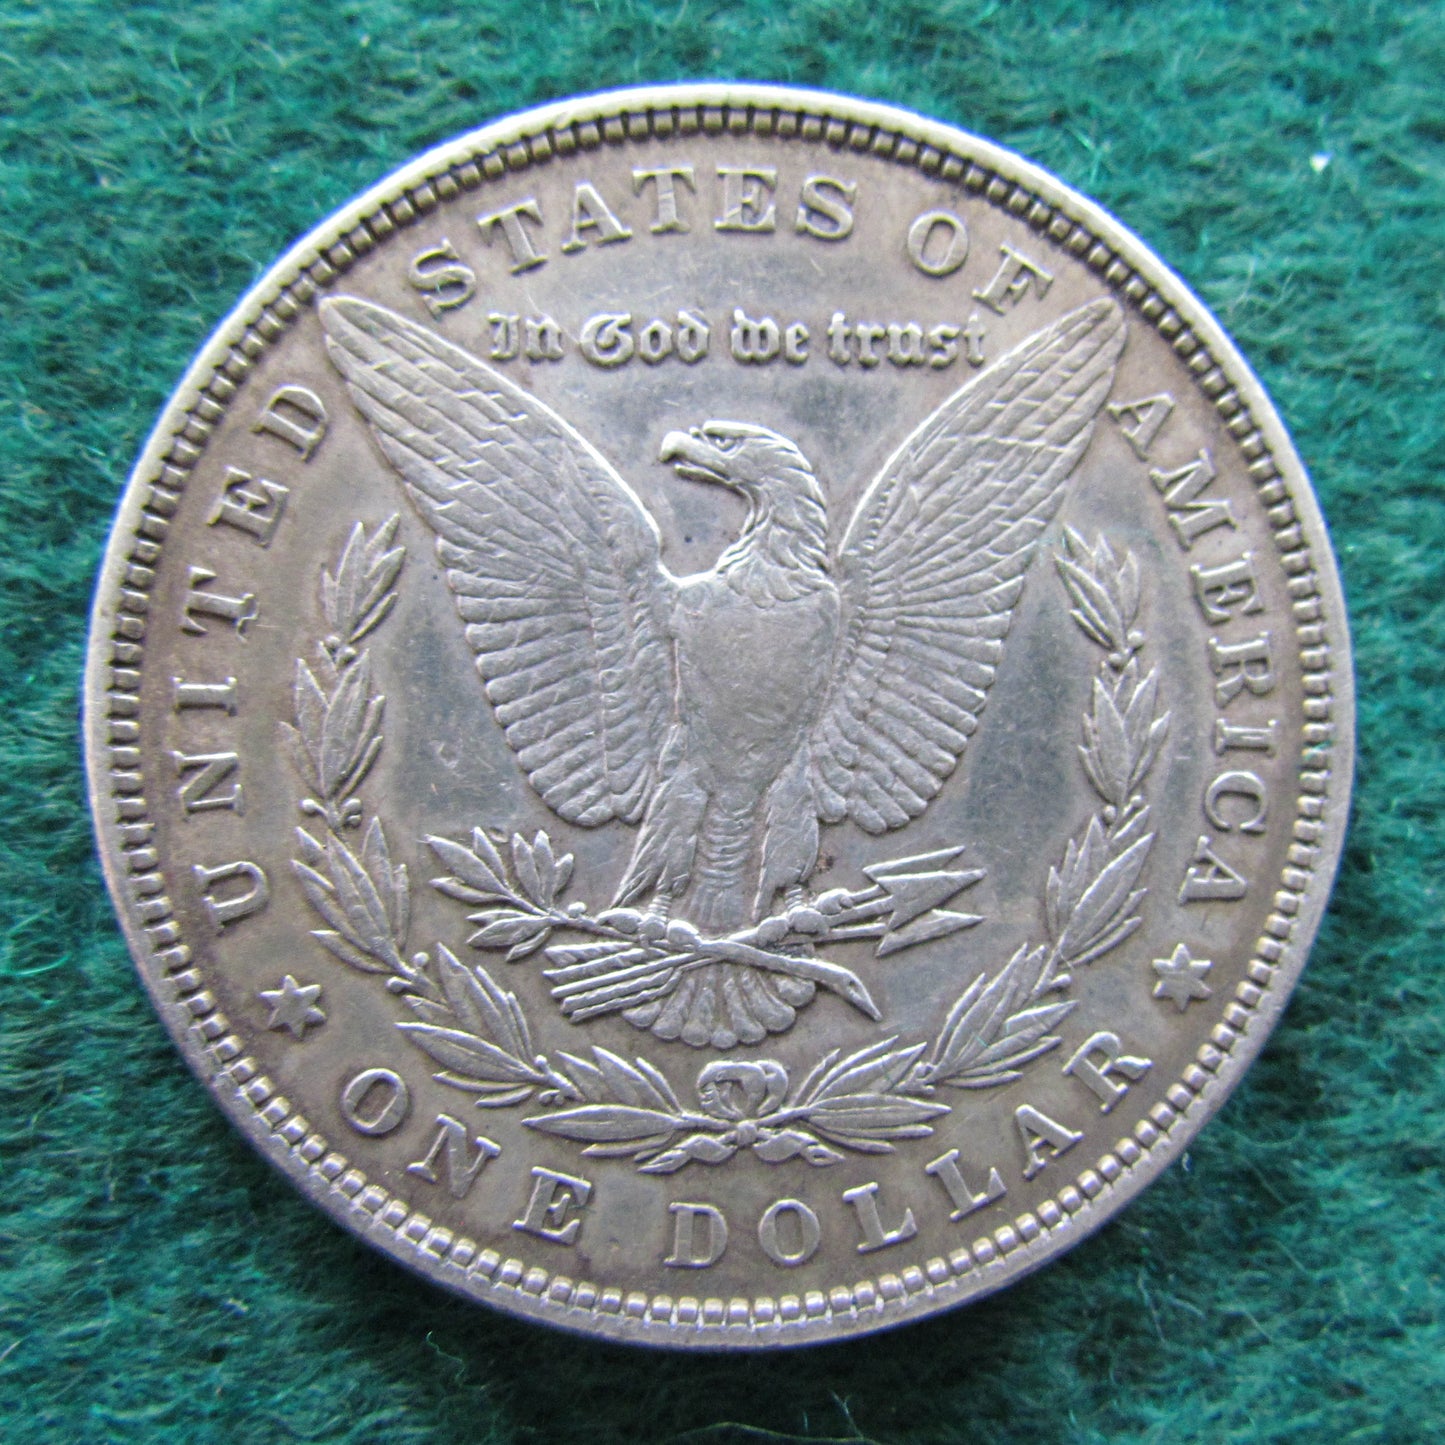 USA American 1884 Morgan Silver Dollar - Circulated